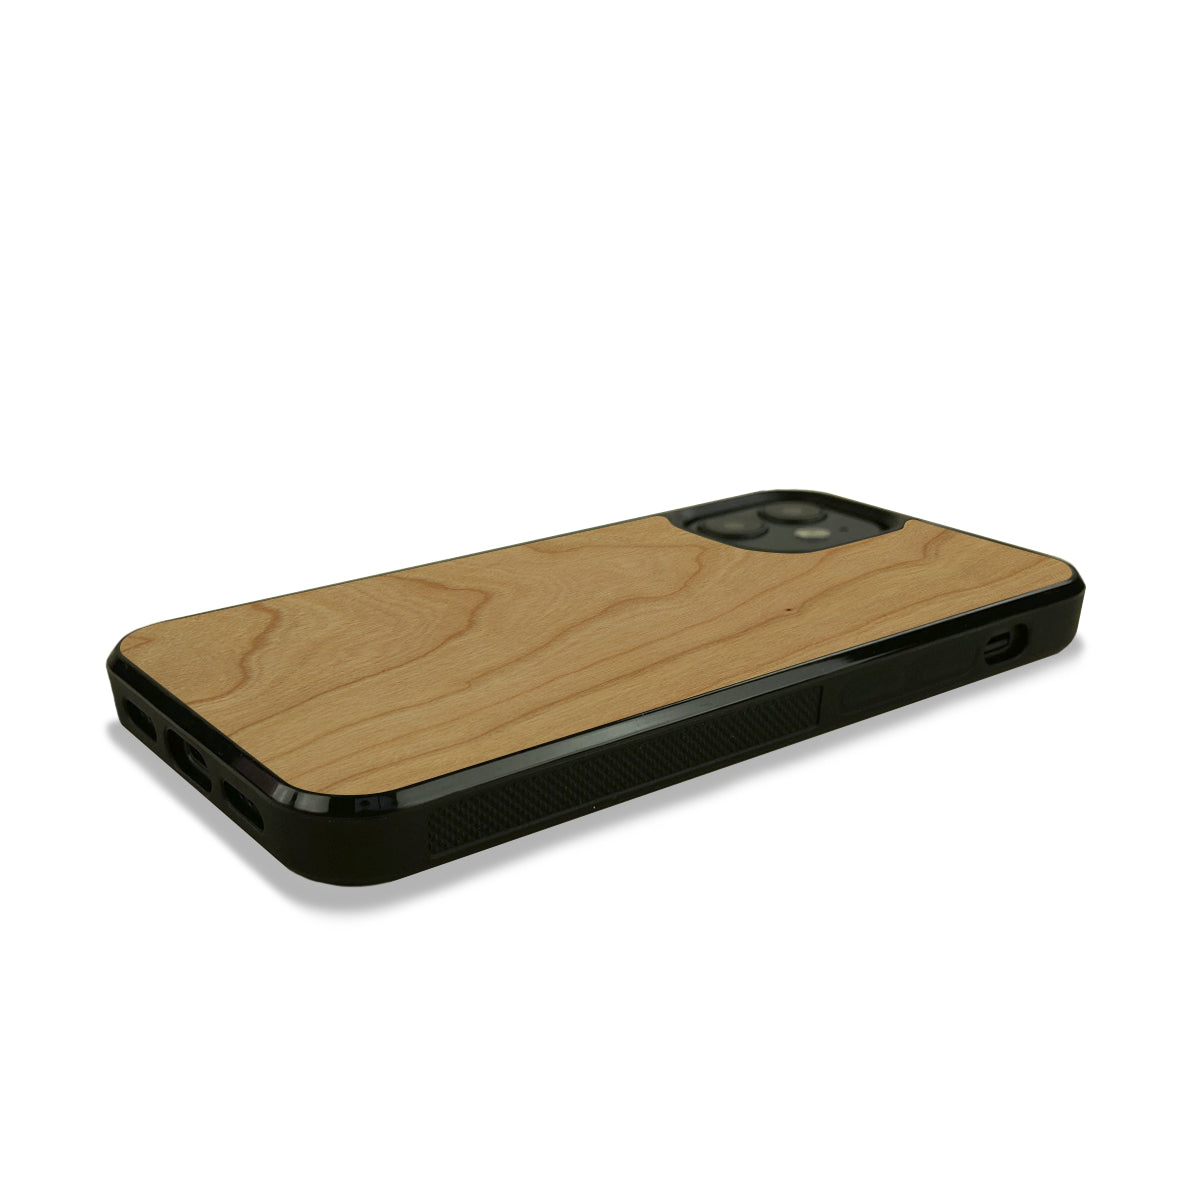 iPhone 12 —  #WoodBack Explorer Black Case